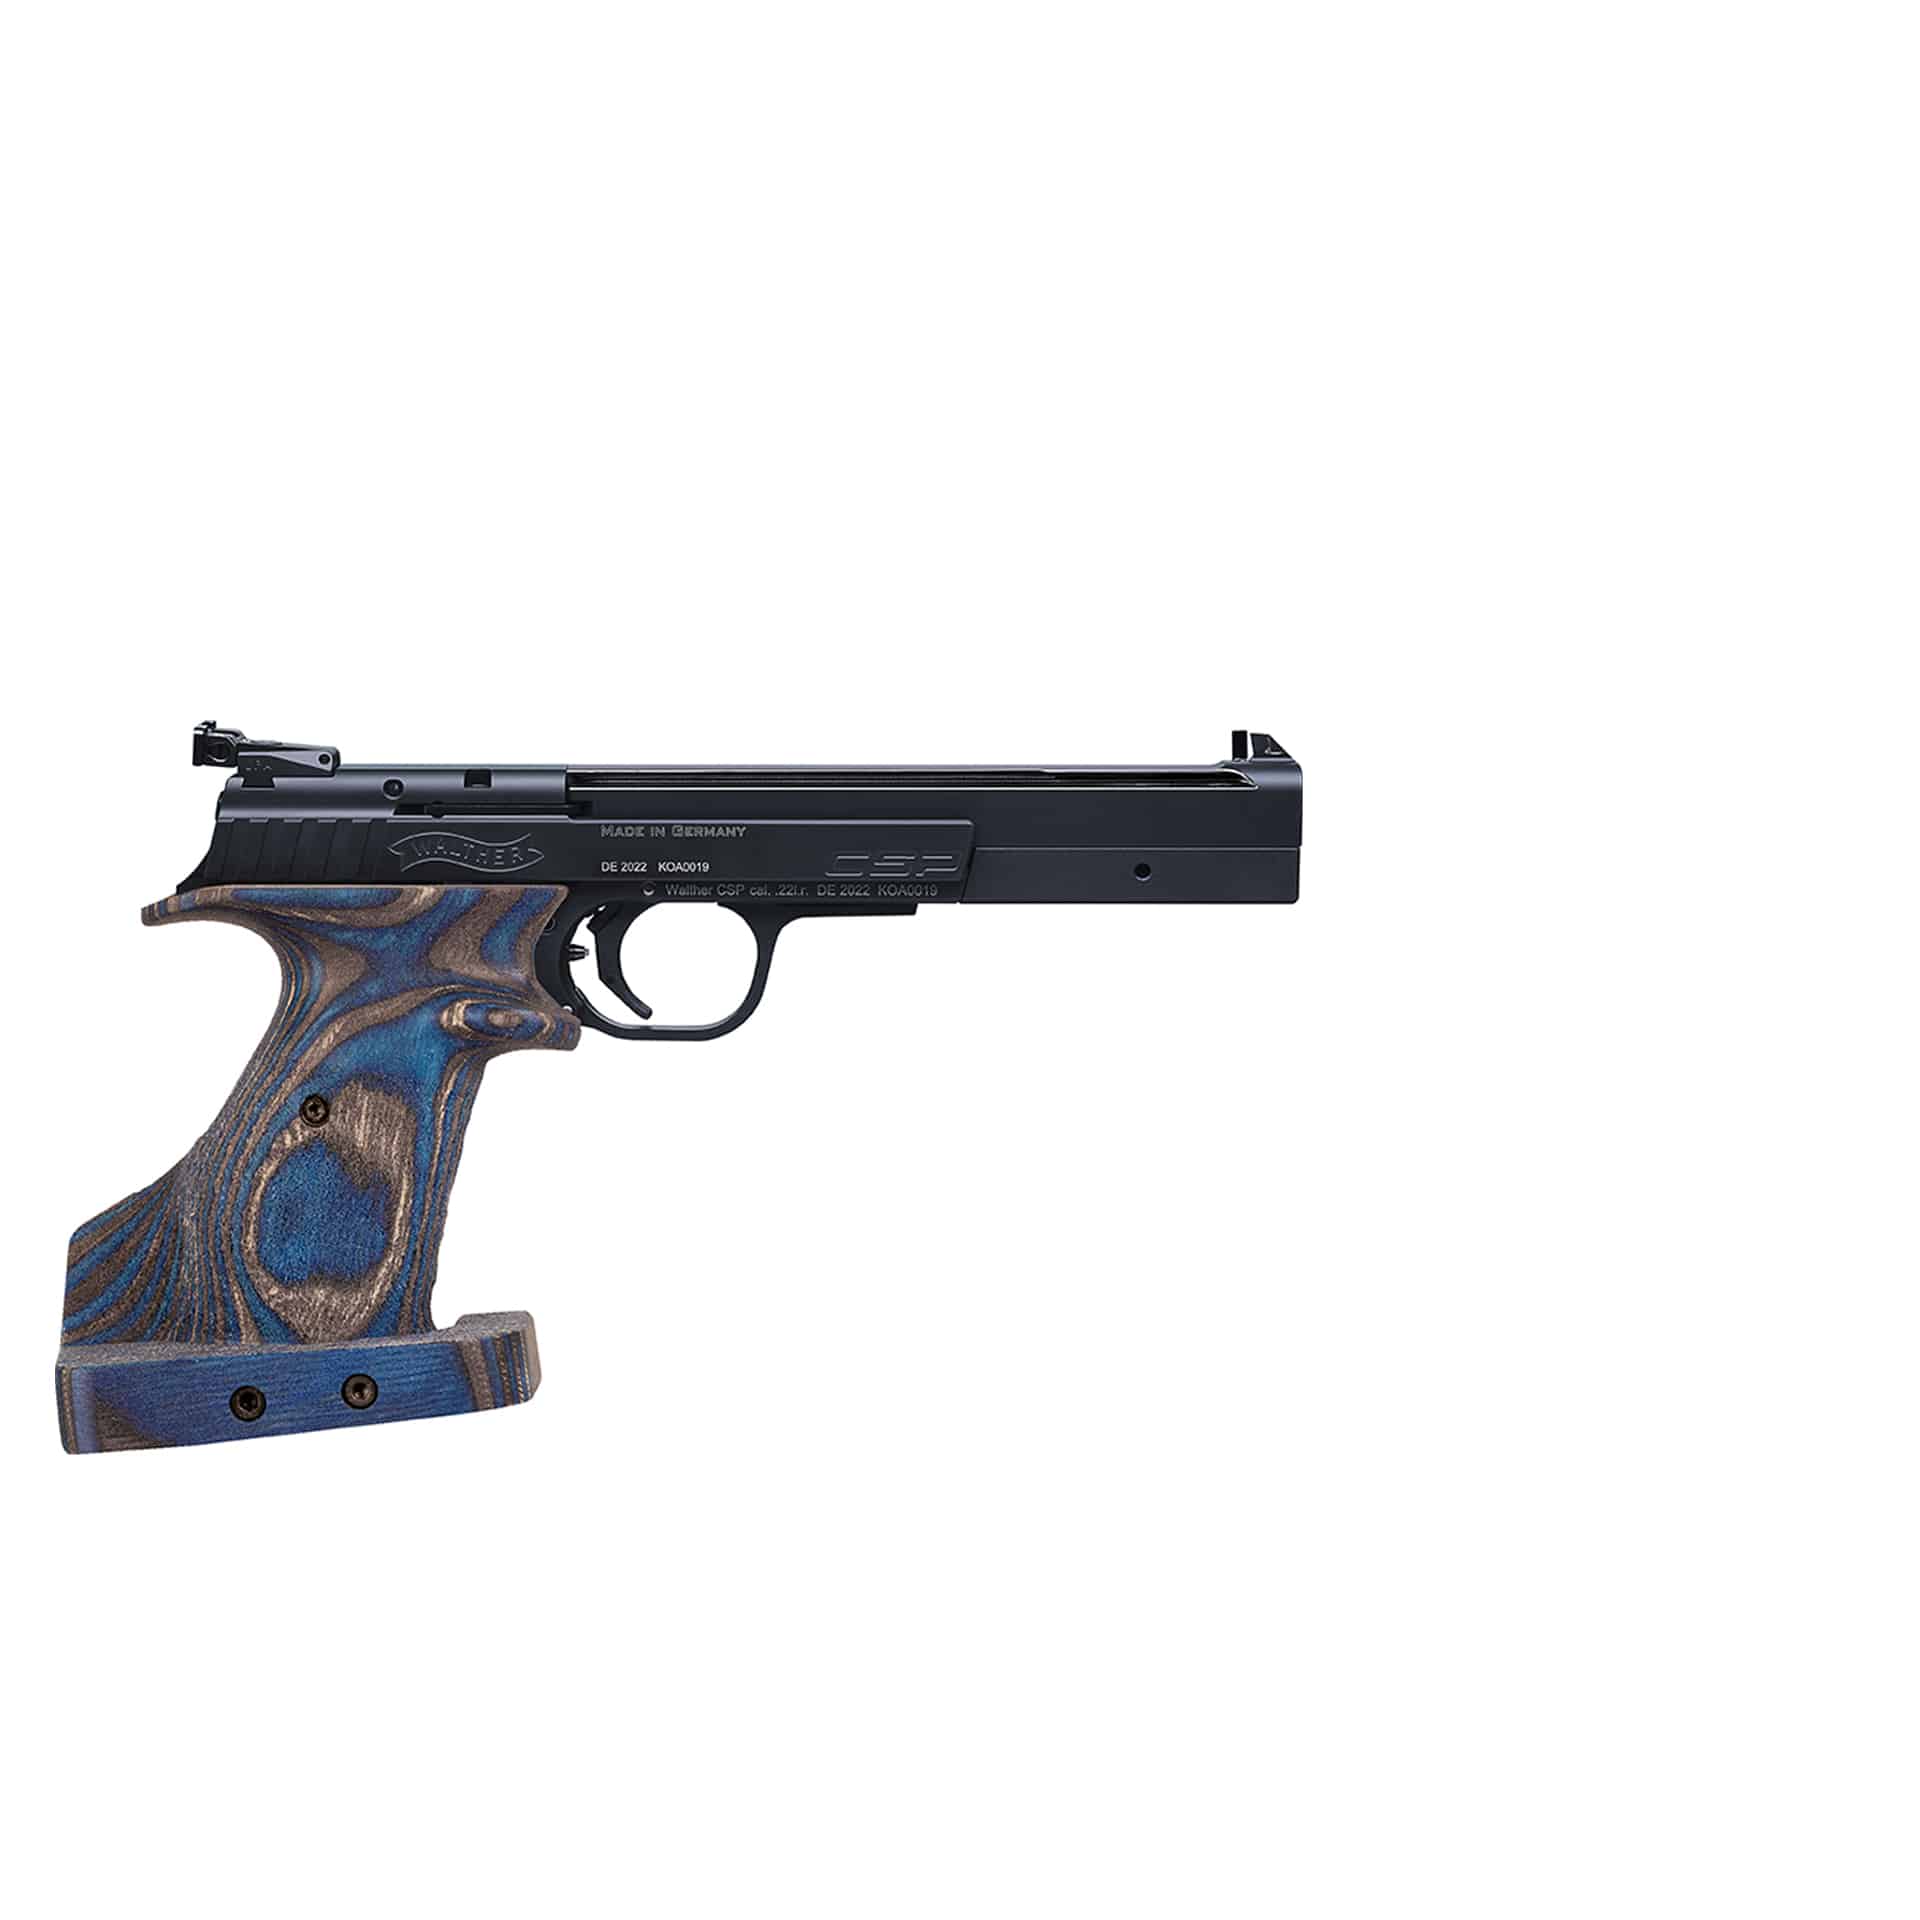 Walther CSP Expert .22 pistol